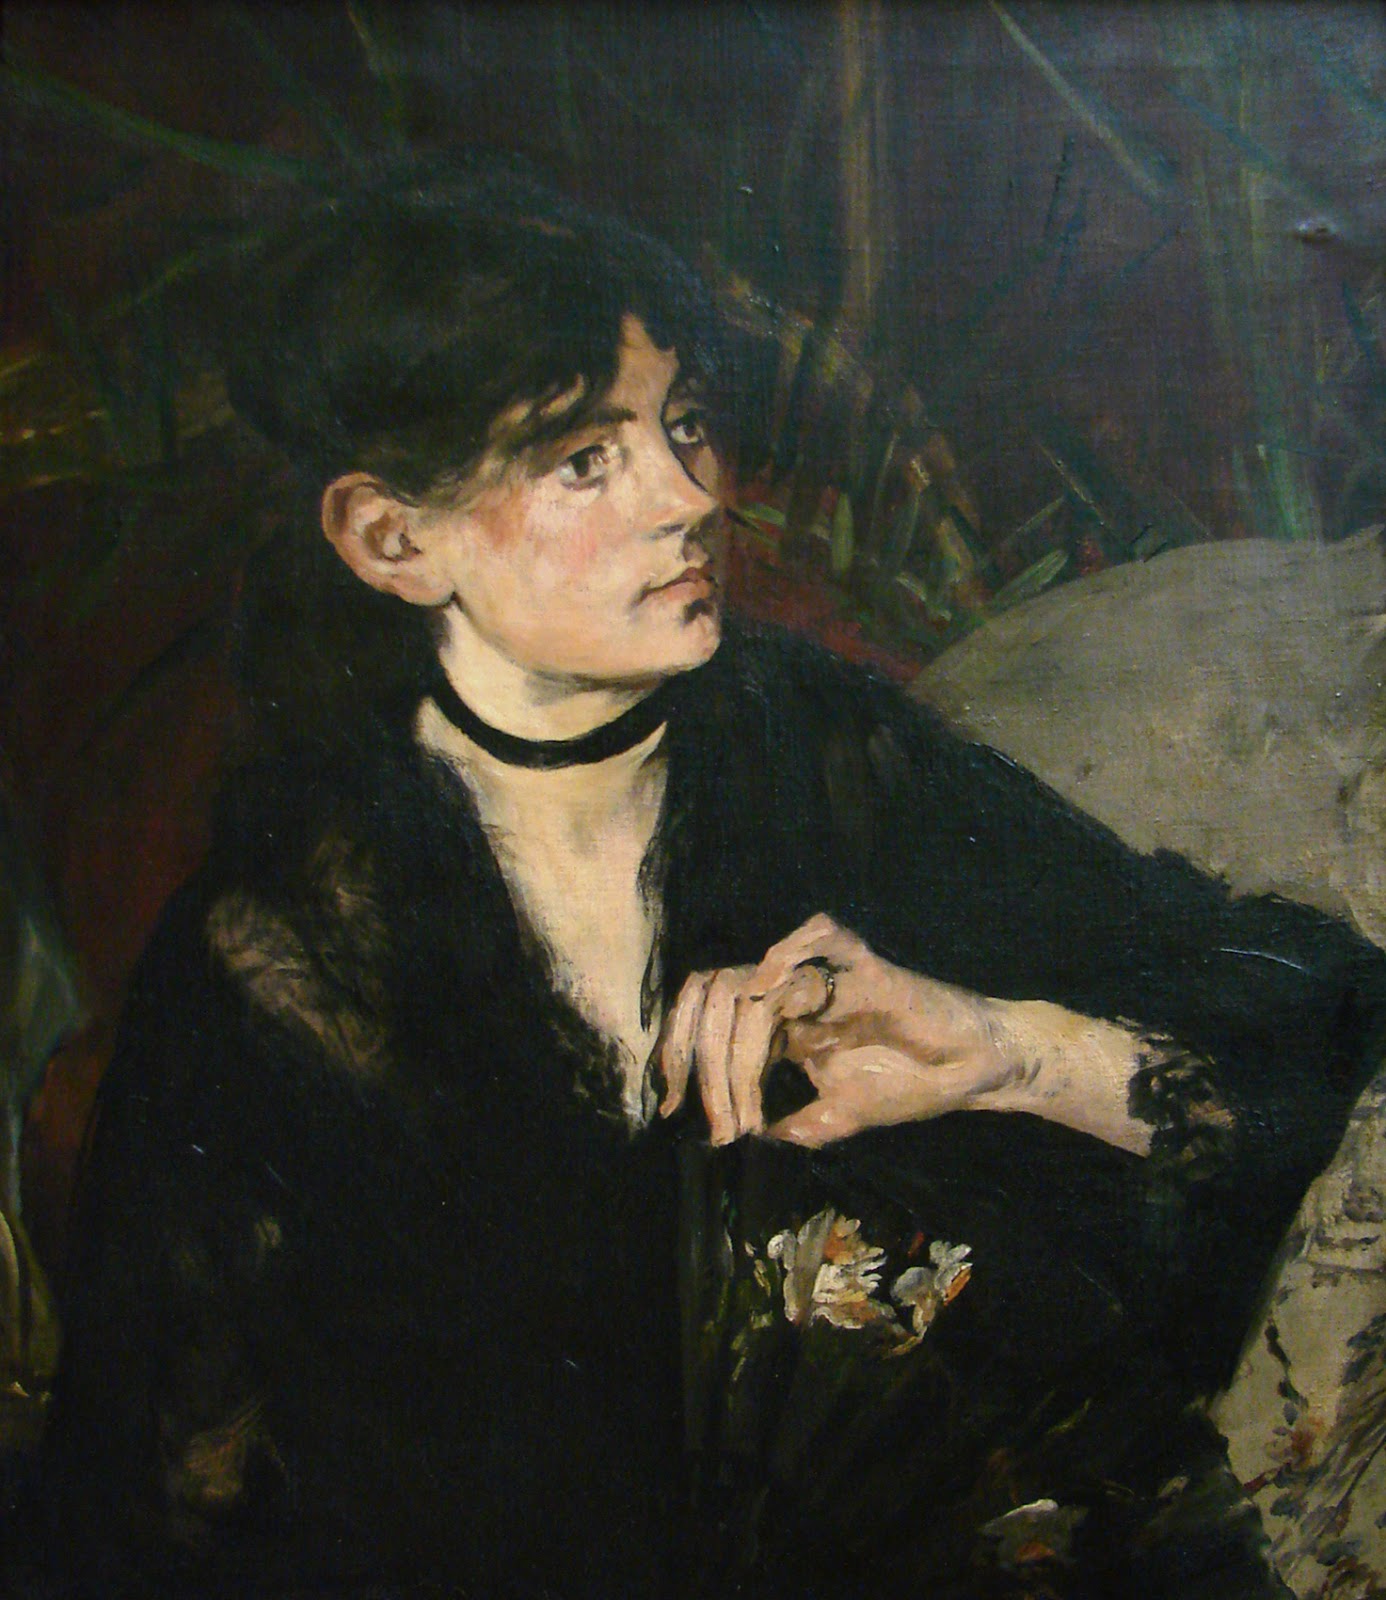 Berthe Morisot - January 14, 1841 - March 2, 1895